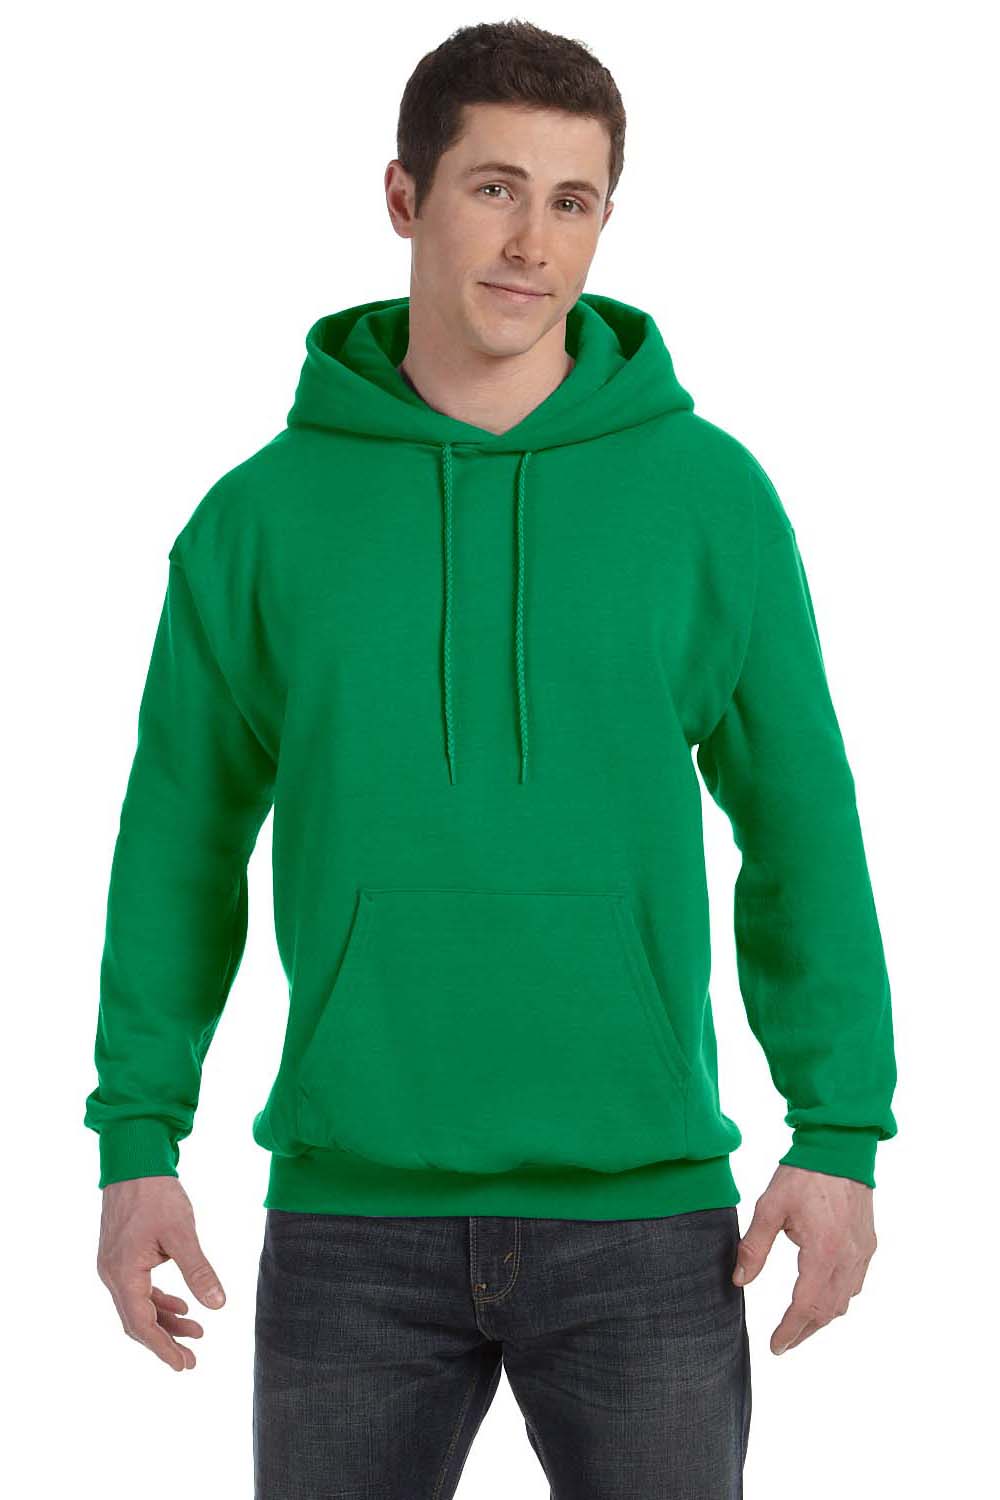 Hanes P170 Mens EcoSmart Print Pro XP Hooded Sweatshirt Hoodie Kelly Green Front